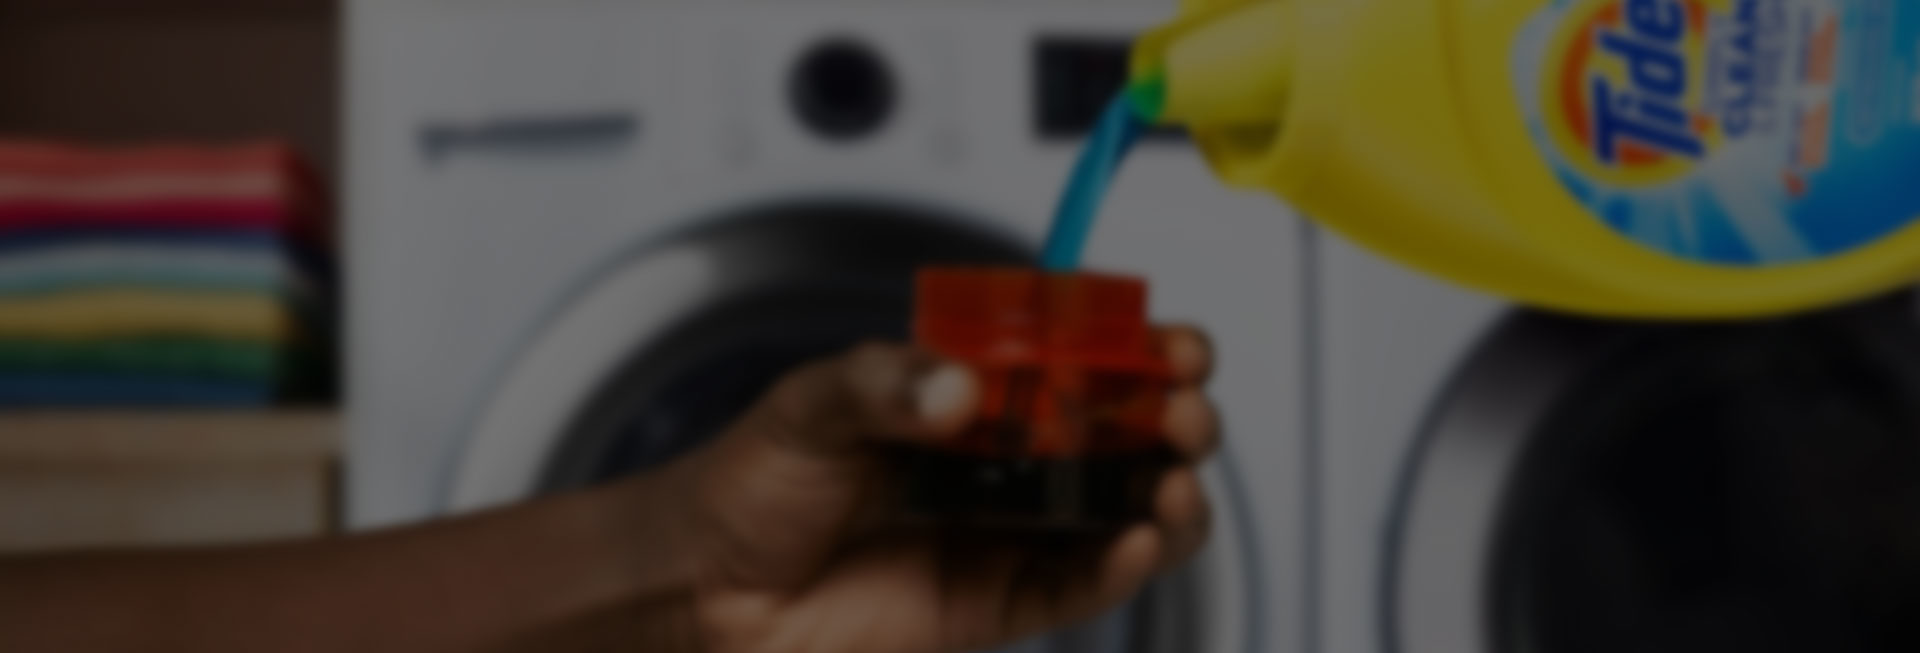 A person pouring Tide liquid laundry detergent into a measurement cup